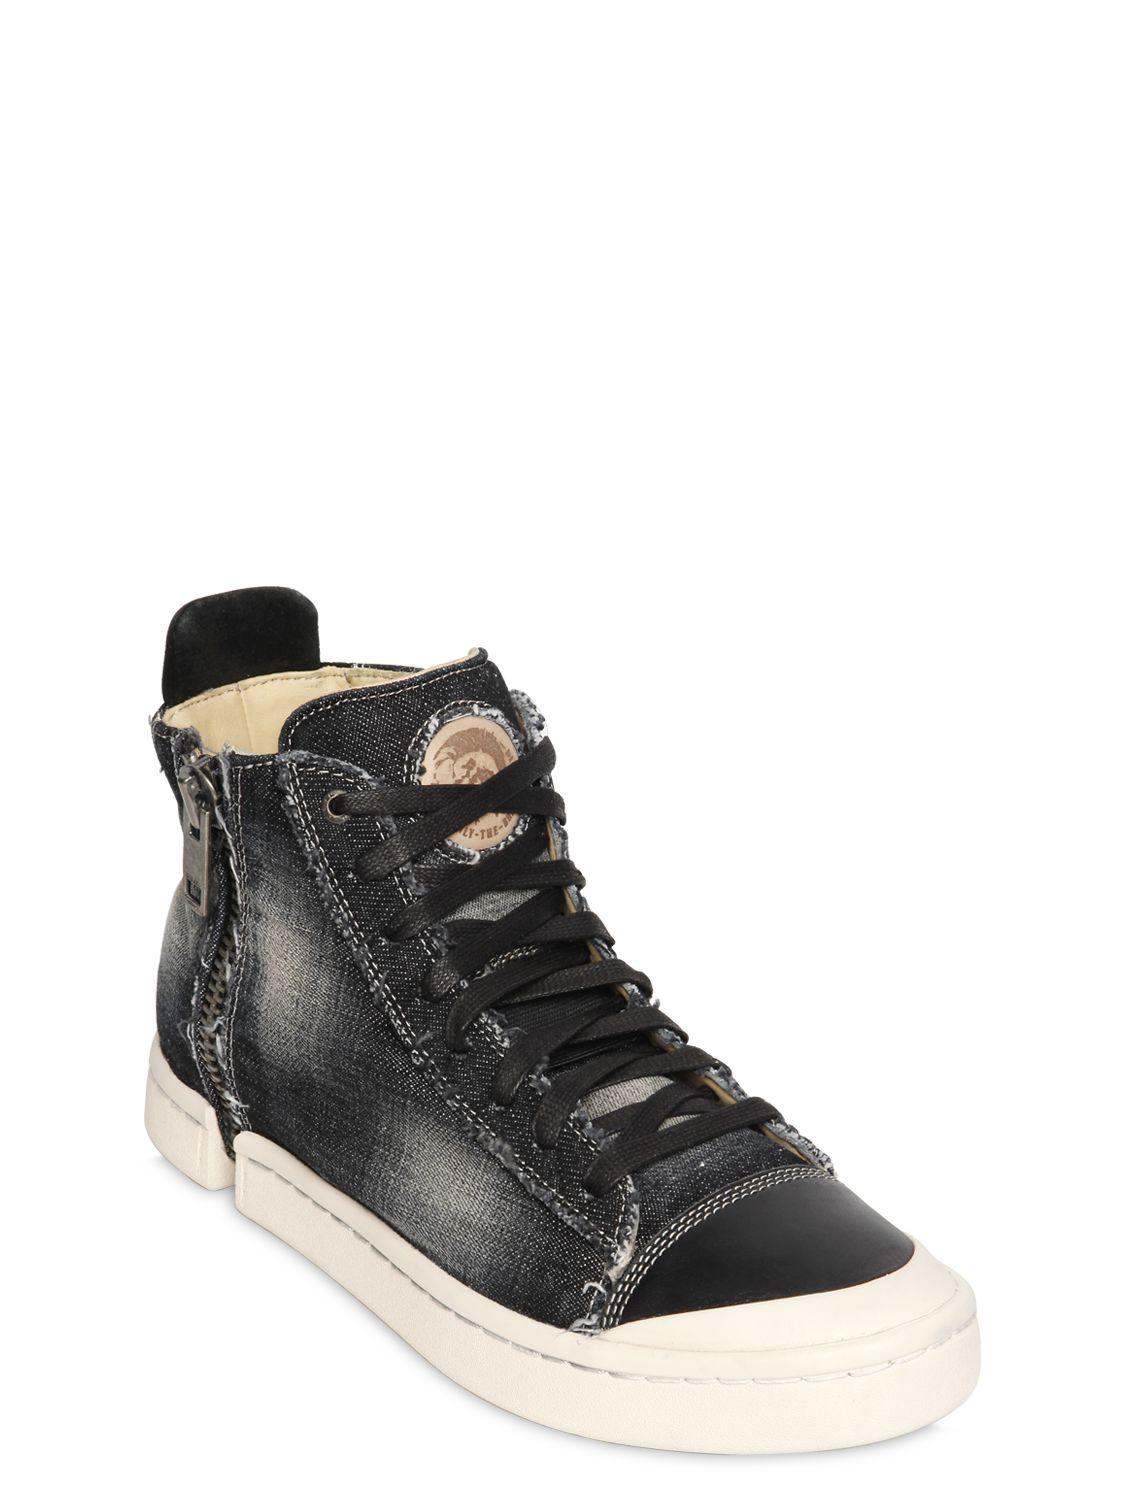 DIESEL Cotton Denim & Leather High Top Sneakers in Black for Men - Lyst